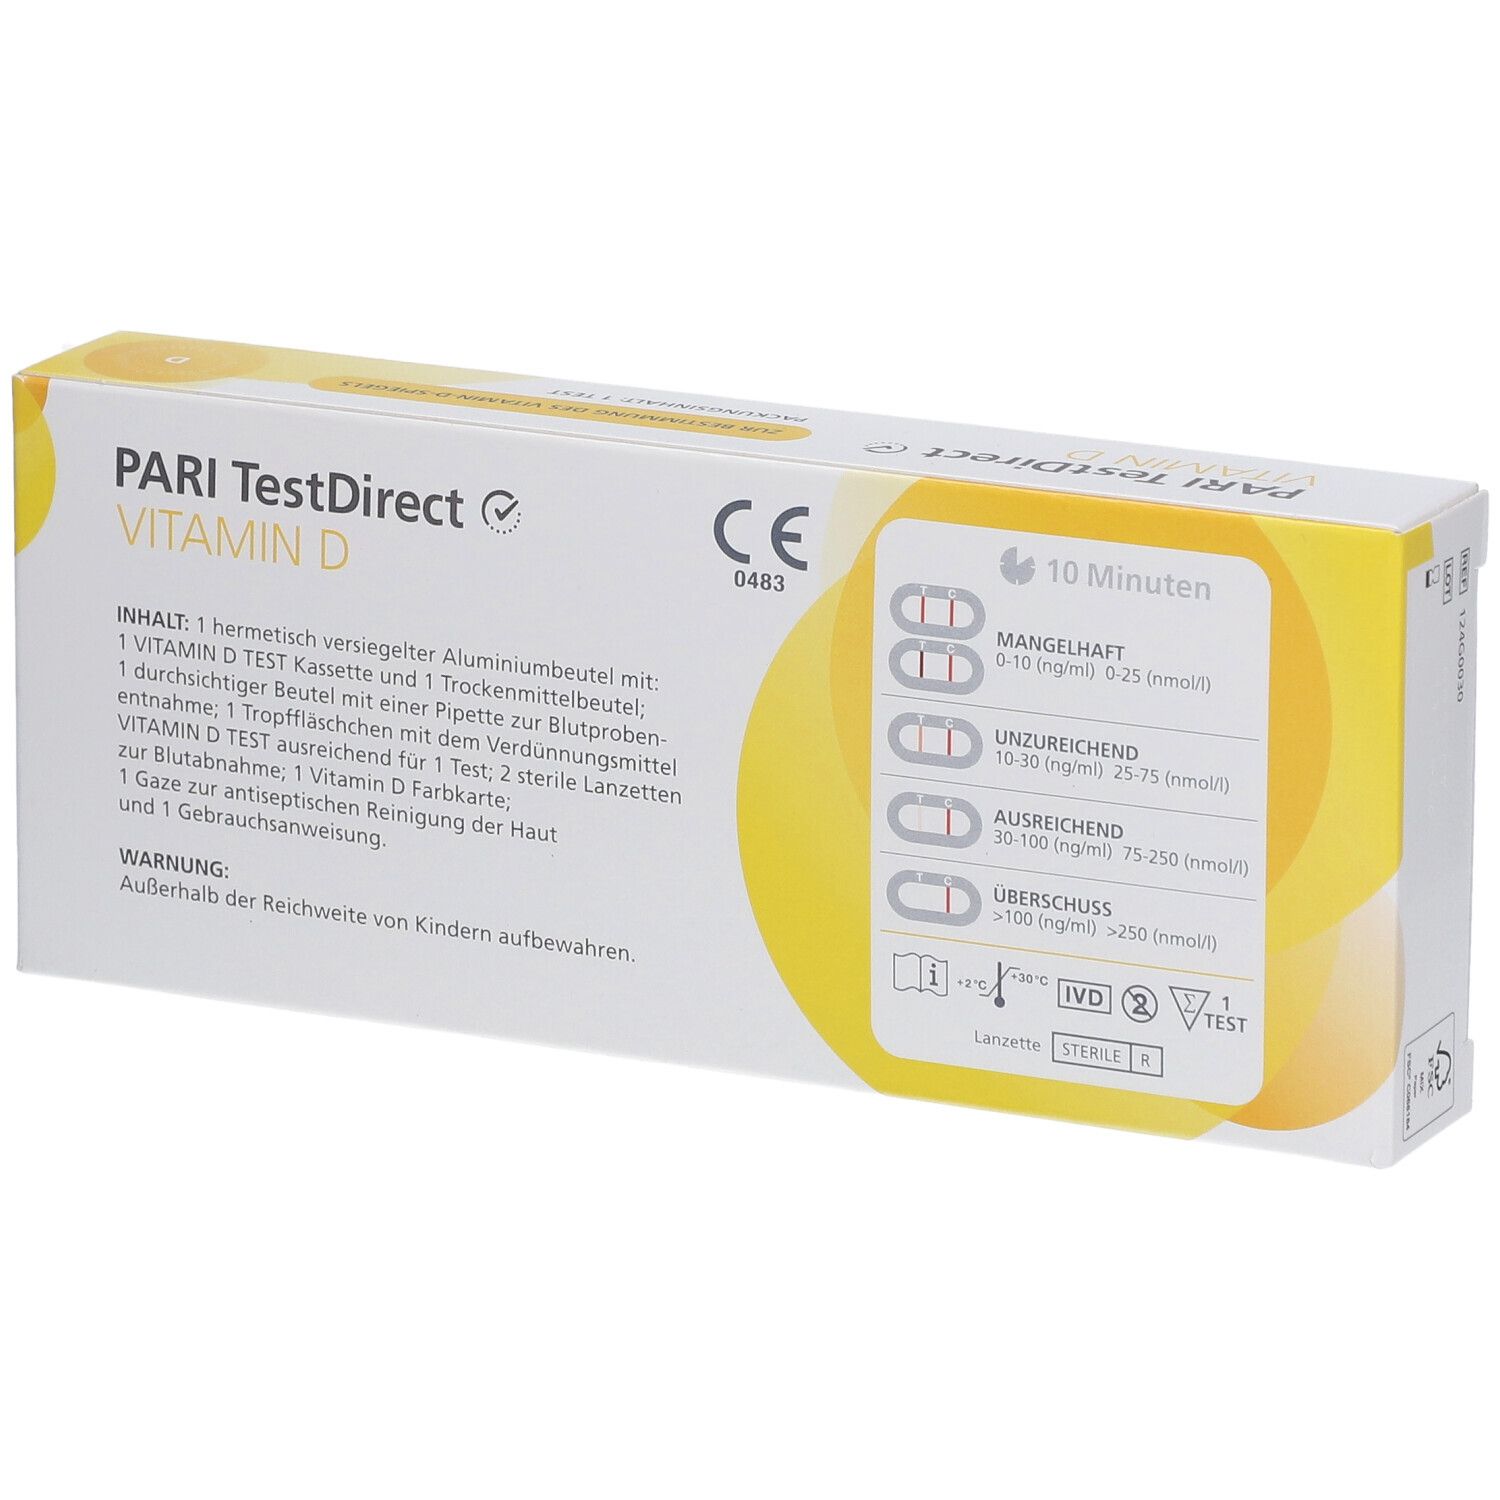 PARI TestDirect Vitamin D